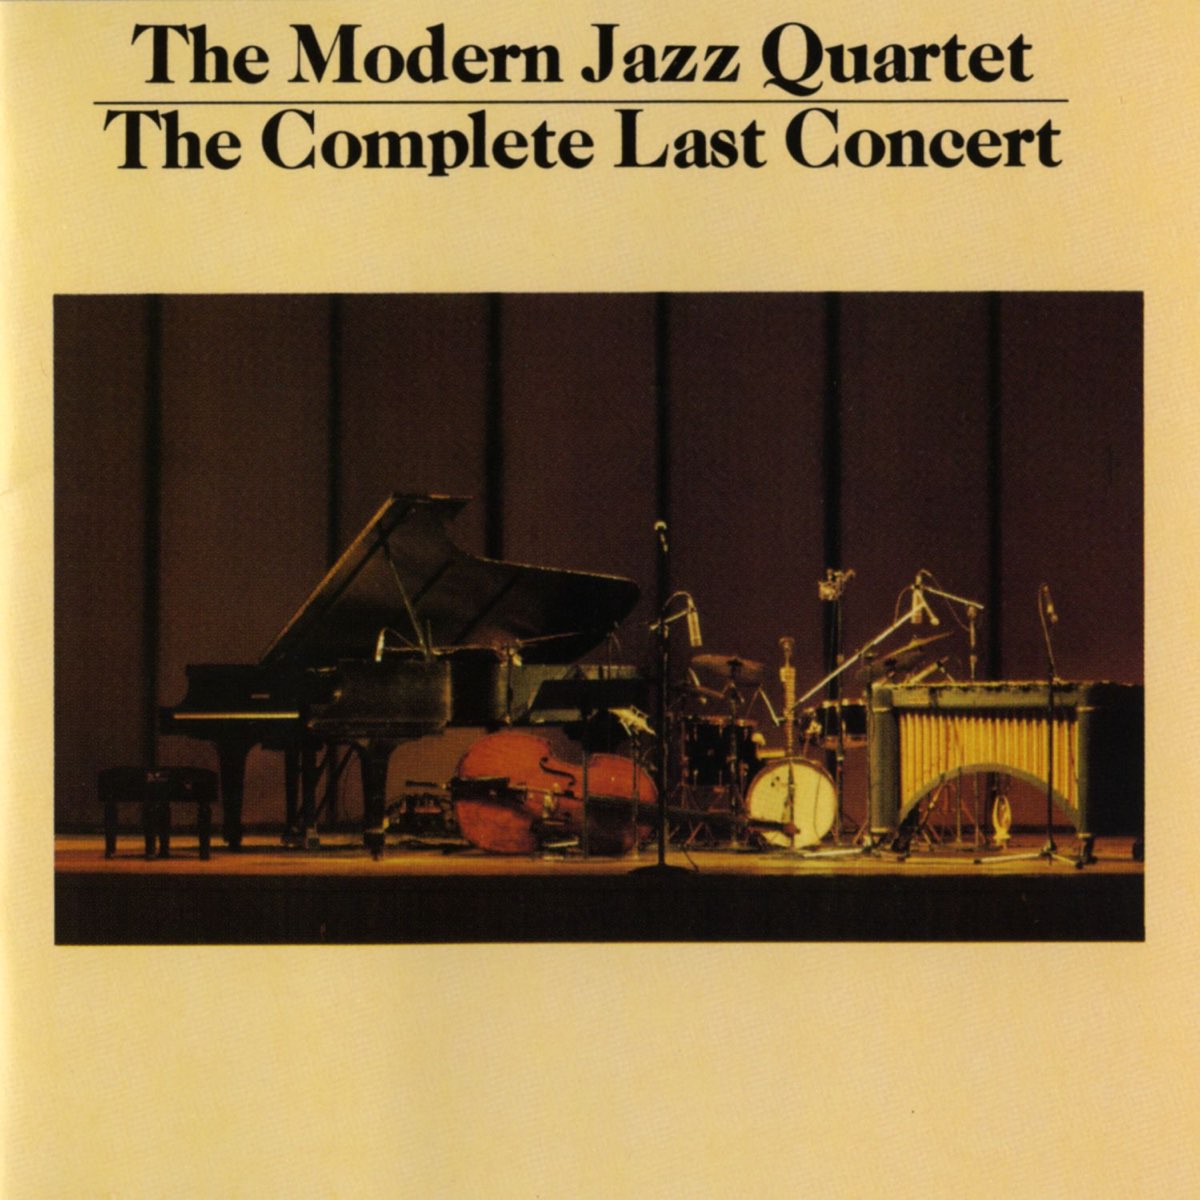 The Complete Last Concert - Album by The Modern Jazz Quartet 